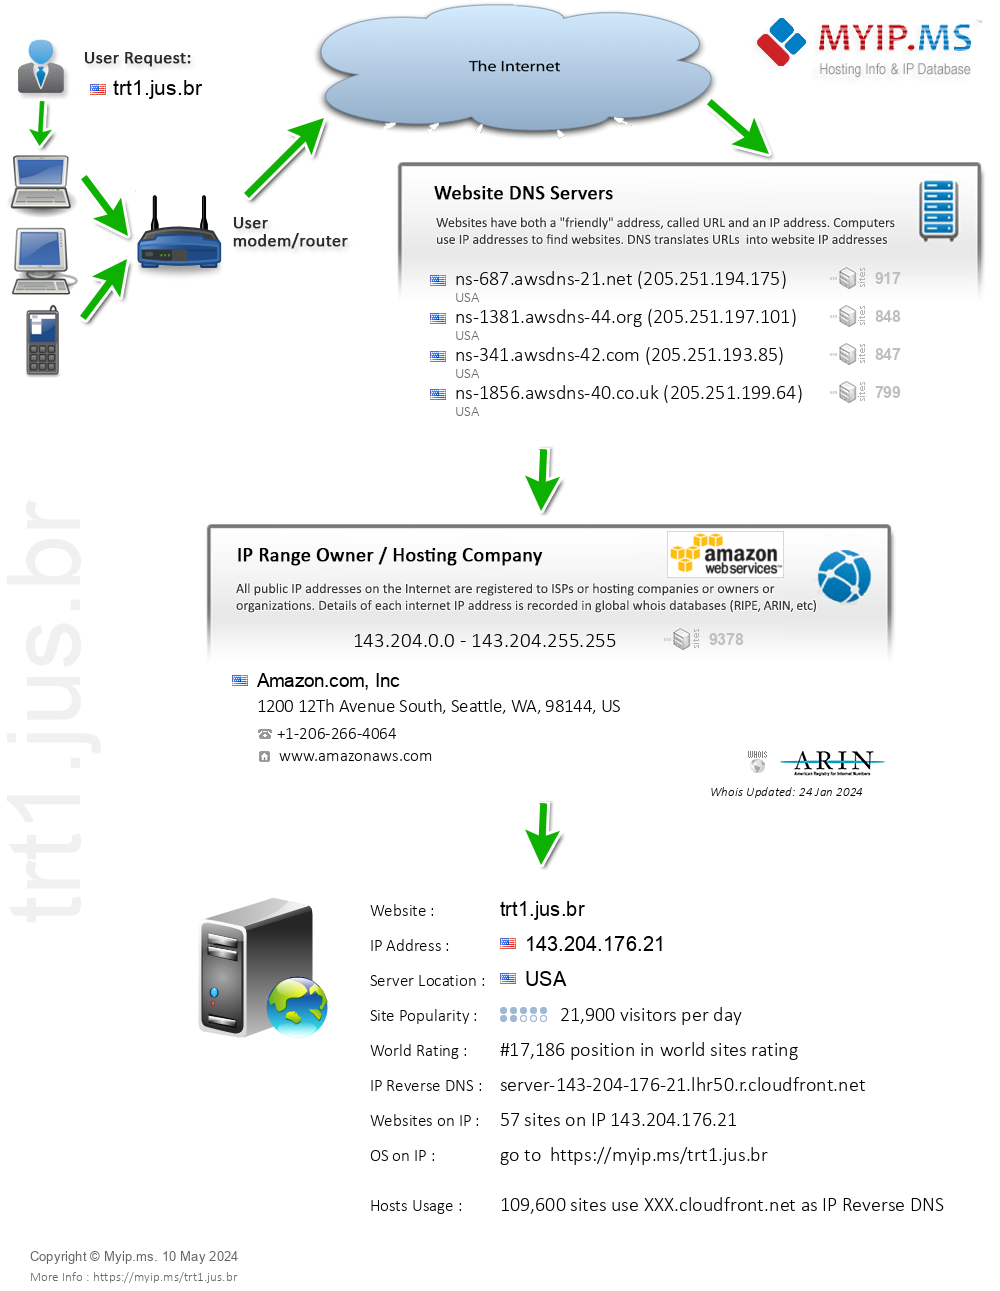 Trt1.jus.br - Website Hosting Visual IP Diagram